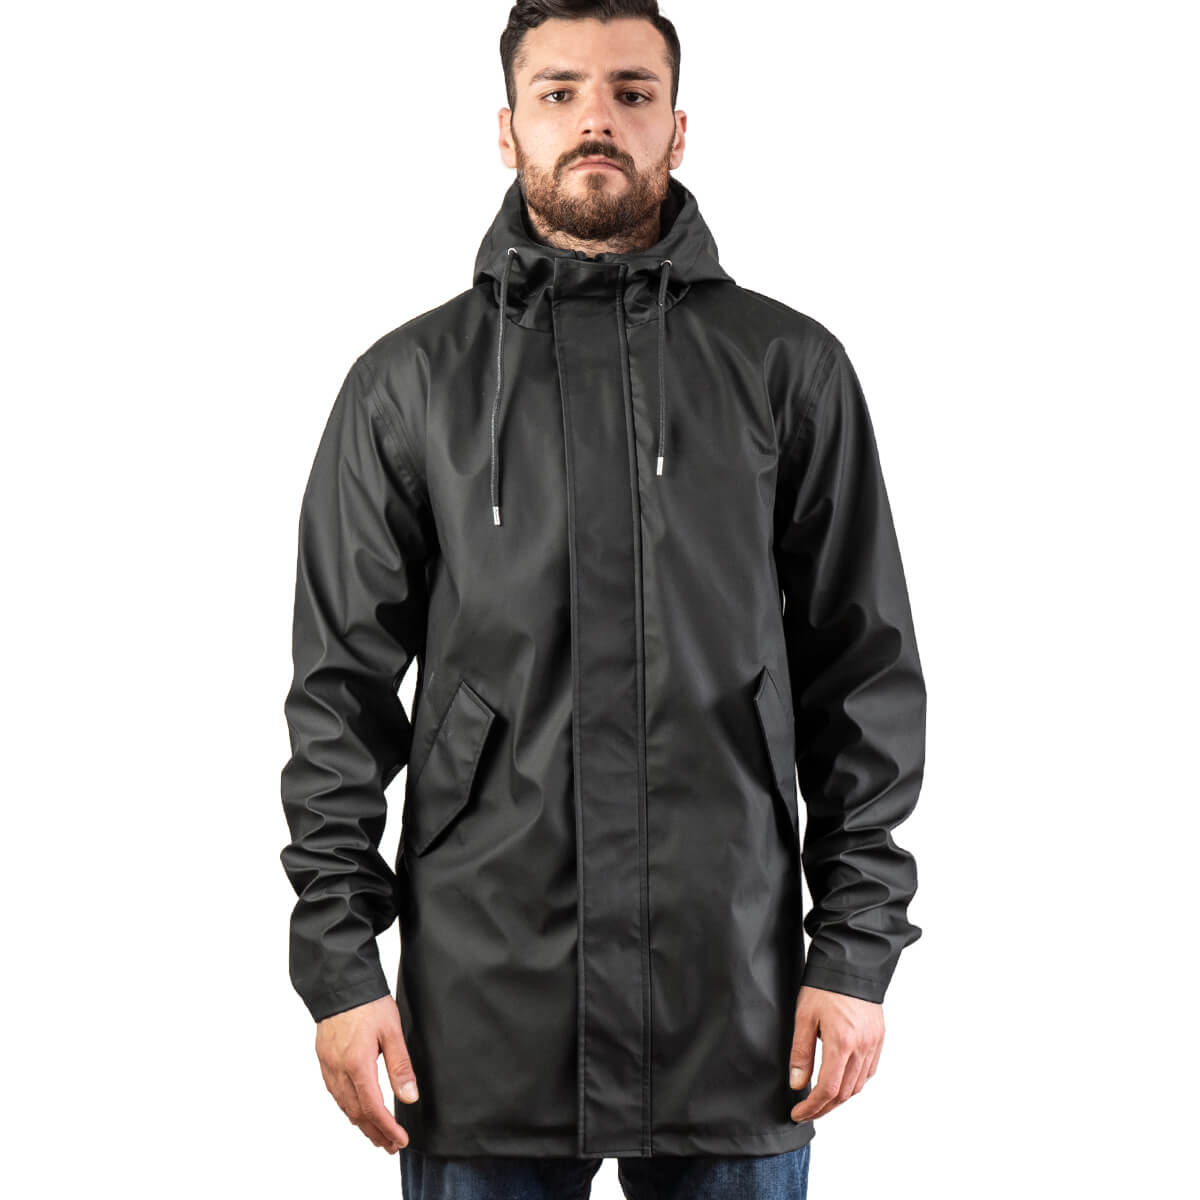 Long Rain Jacket With Waterproof PU Coating And Heat-sealed Seams